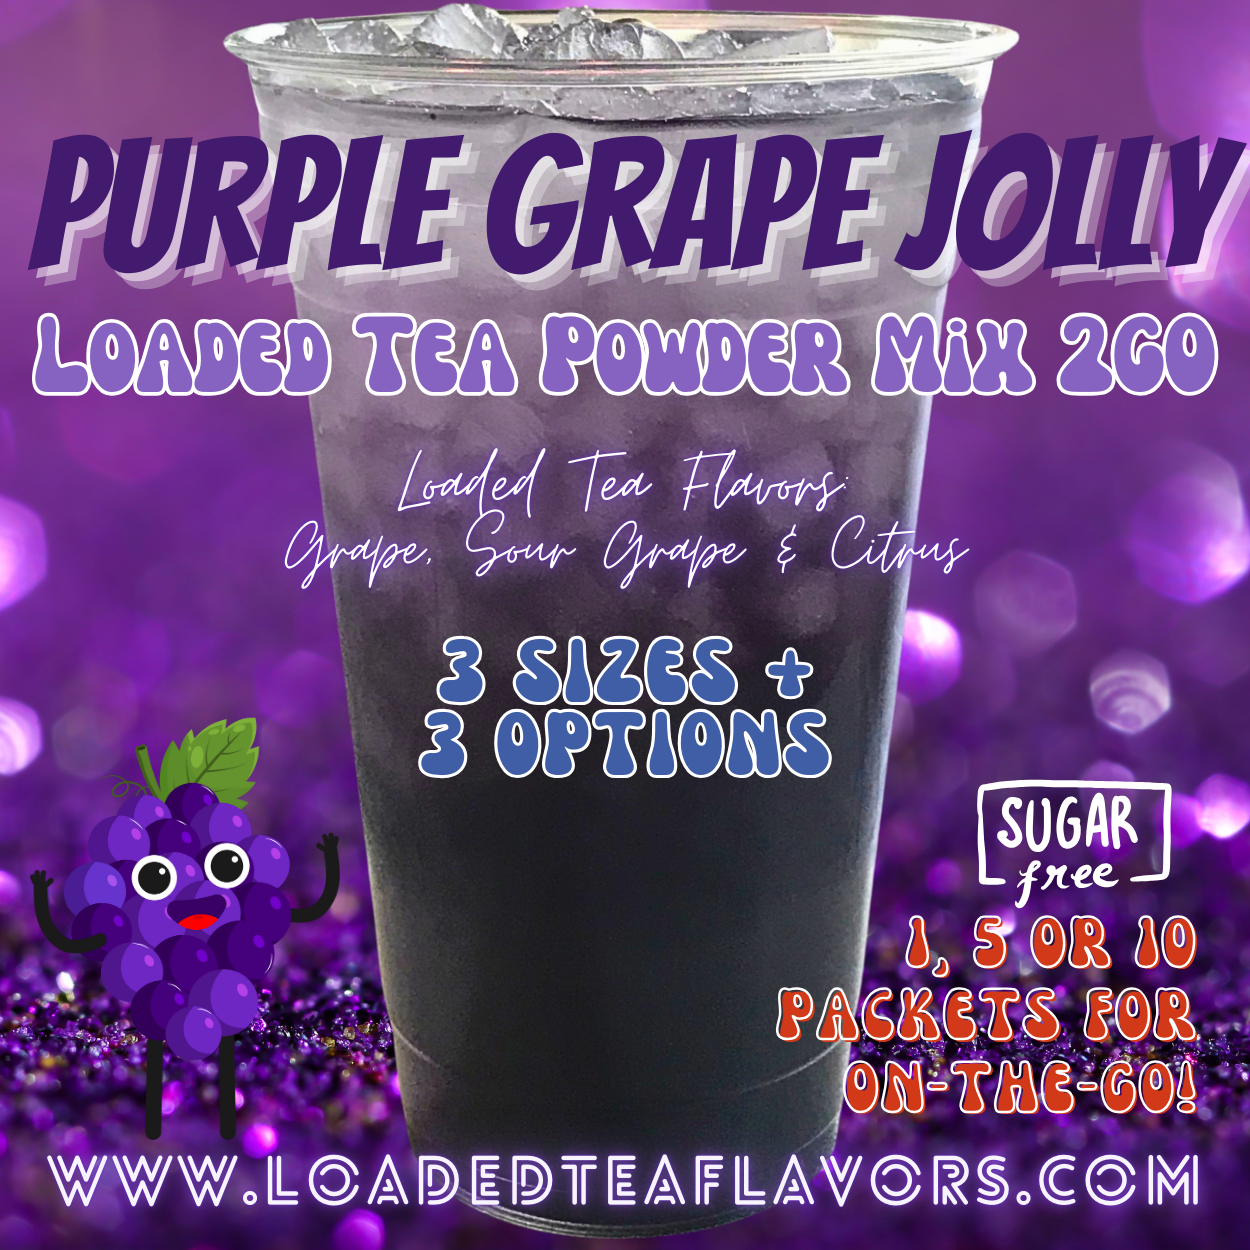 Purple Grape Jolly: Loaded Tea Powder Mix 2GO Packets